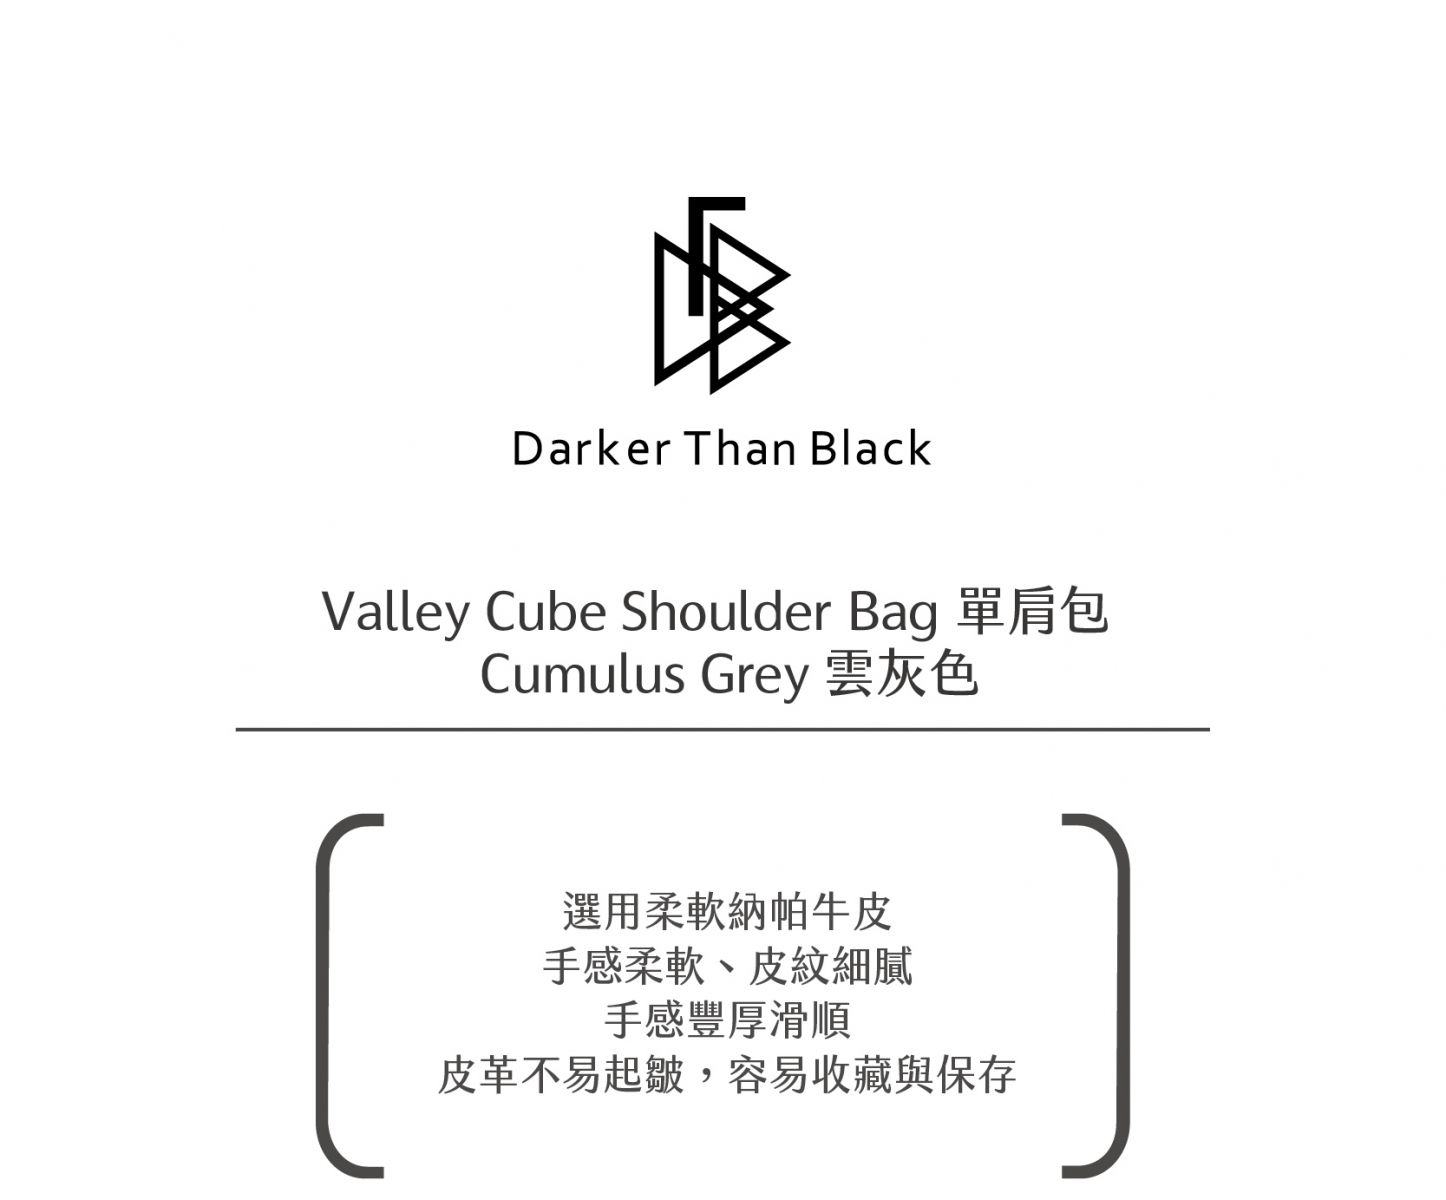 Valley Cube Shoulder Bag 方型軟包(納帕牛皮) - Cumulus Grey 雲灰色